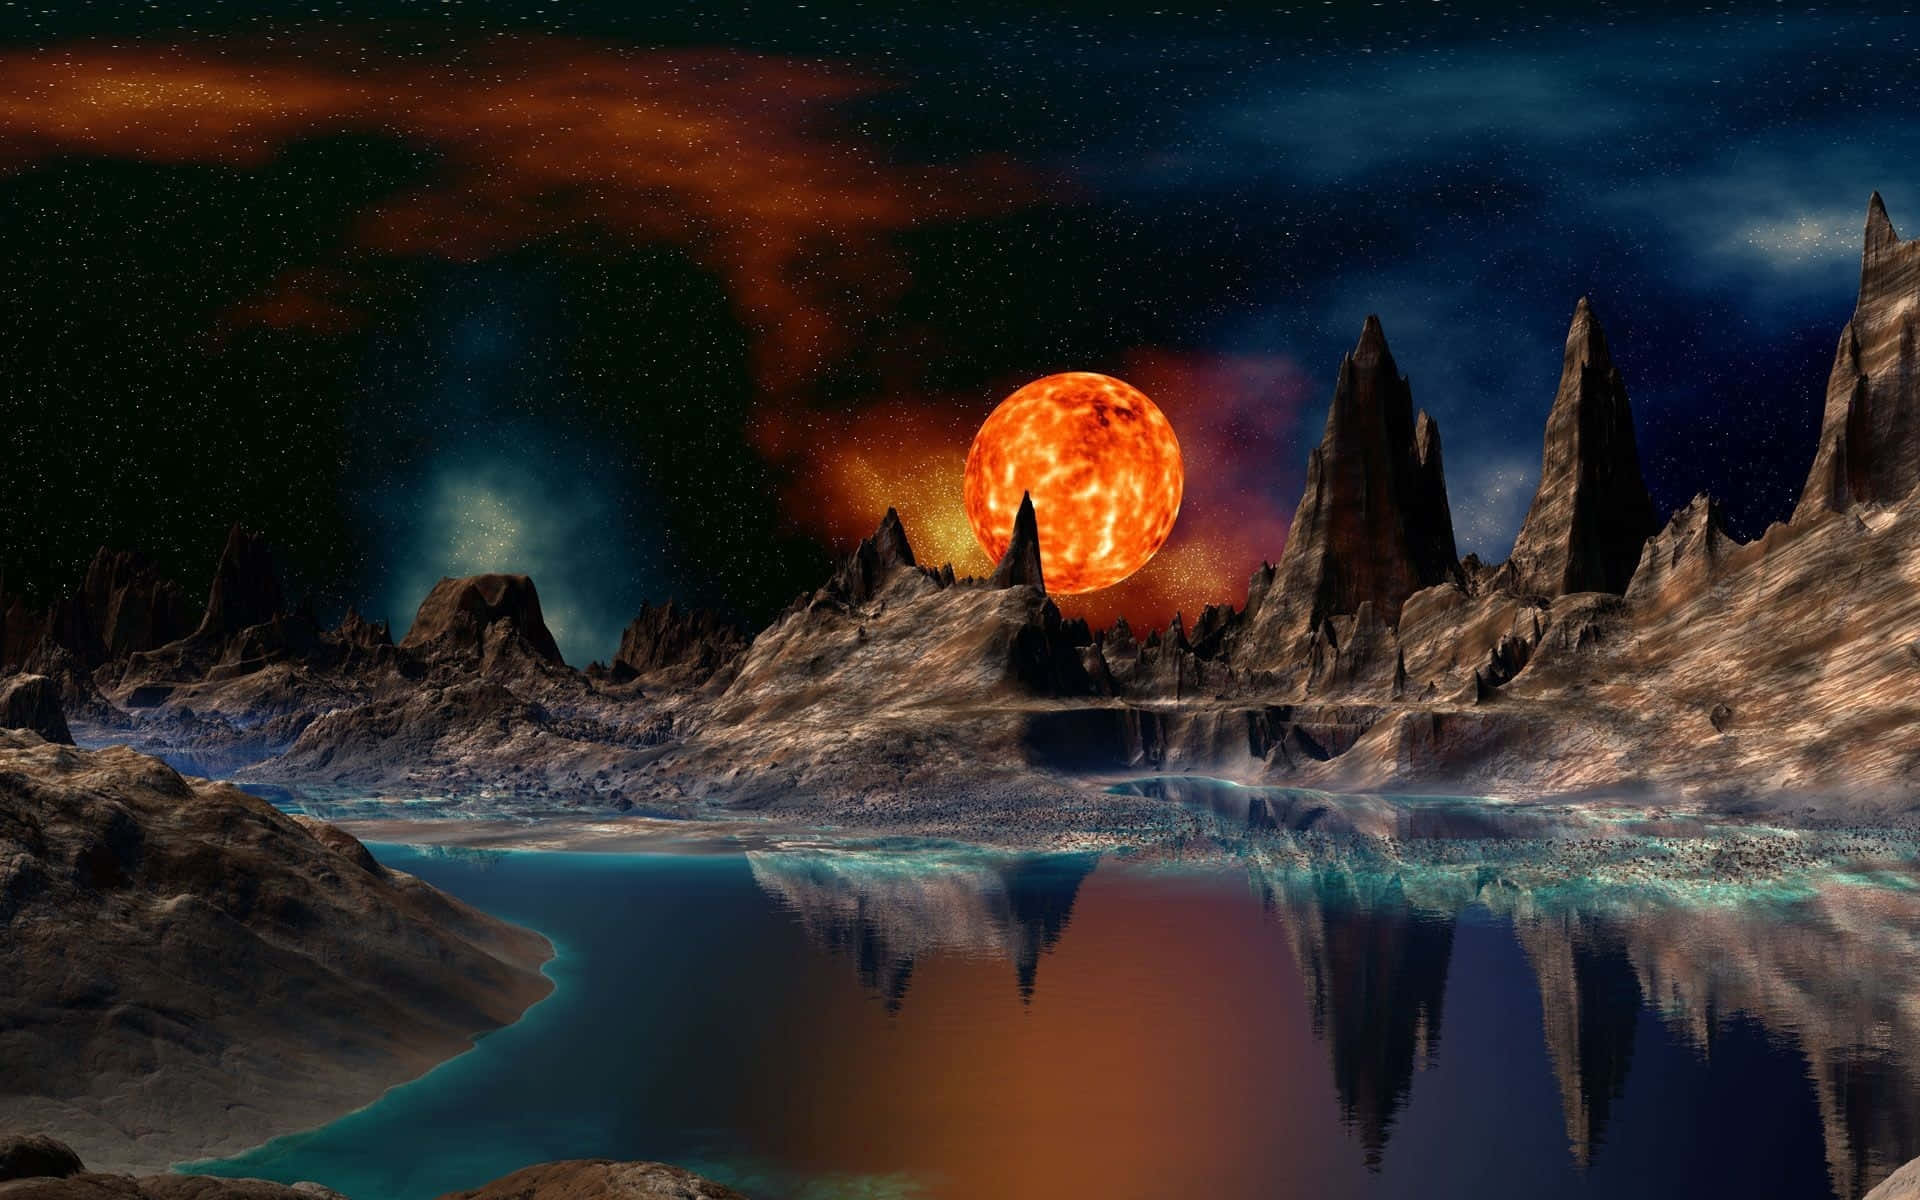 Super Cool Outer Space Landscape Fantasy Art